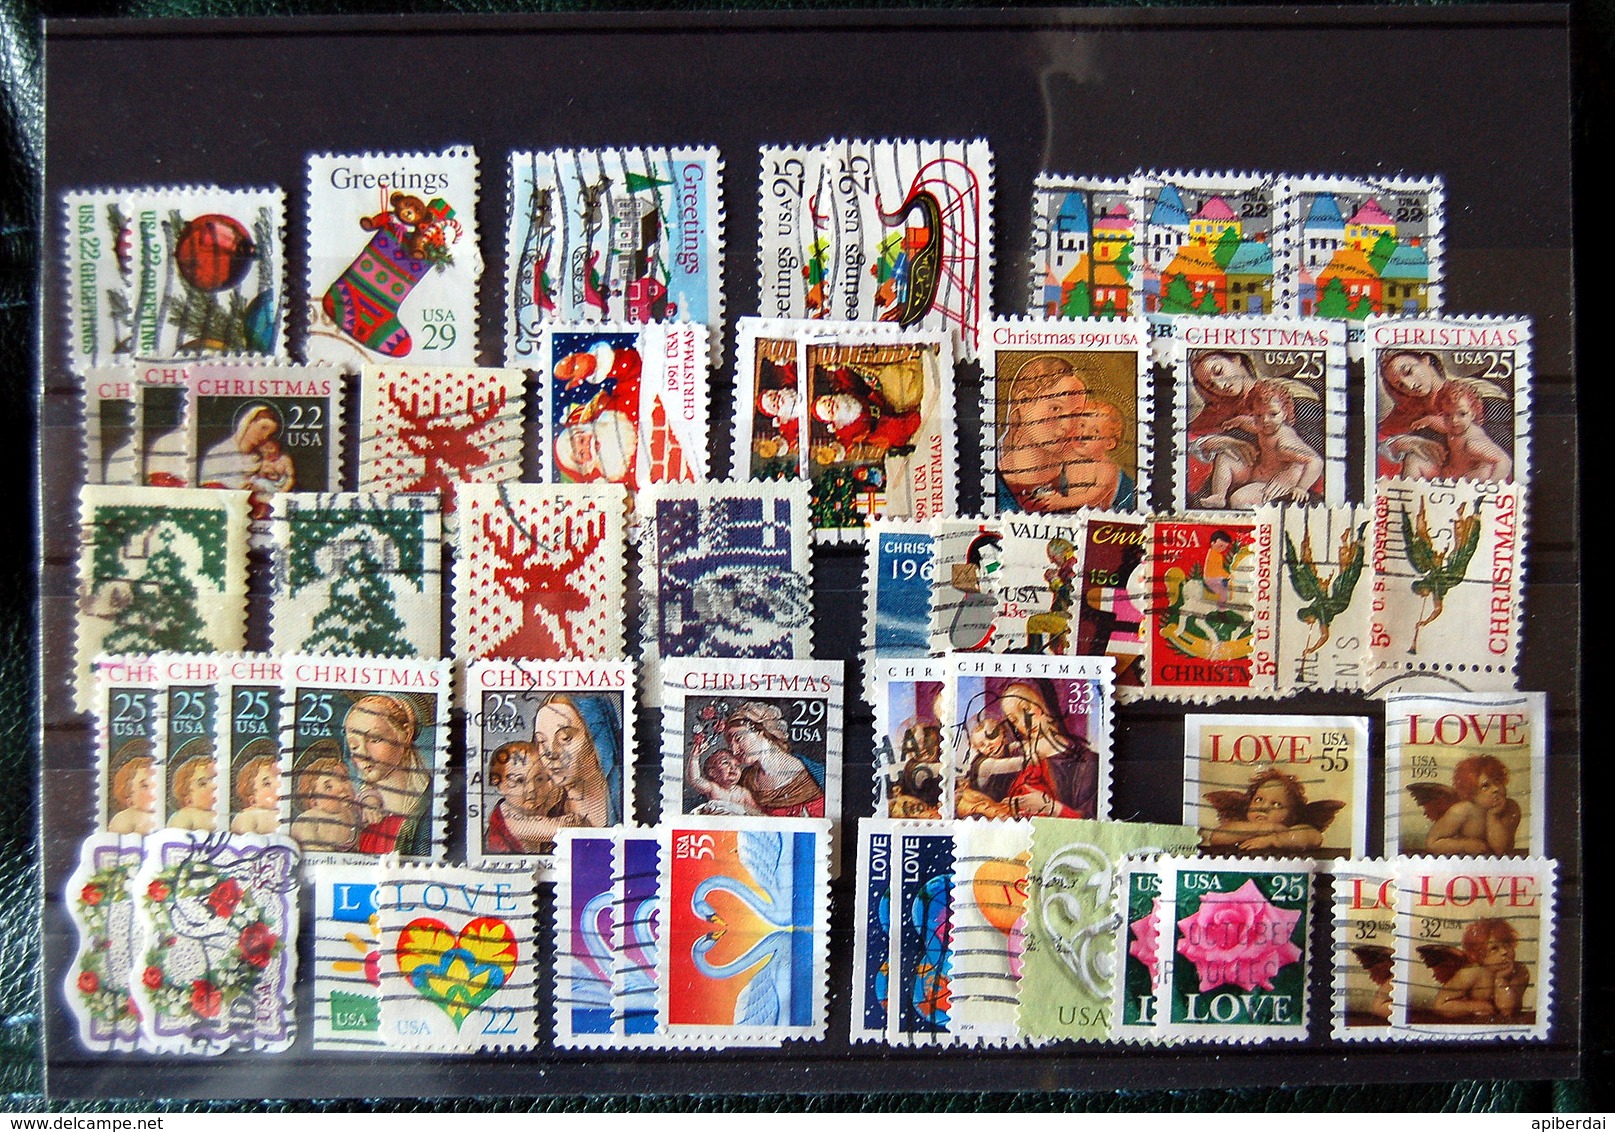 USA - Batch Of 56 Stamps With The Thema Of Christmas, Greetings And Love  (used) - Usados